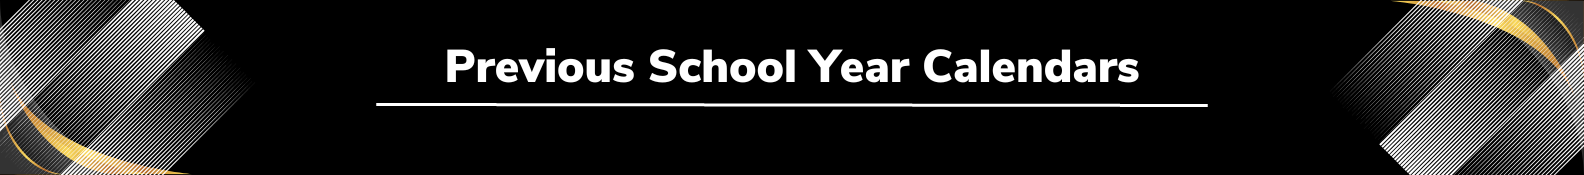 Previous School Year Calendars